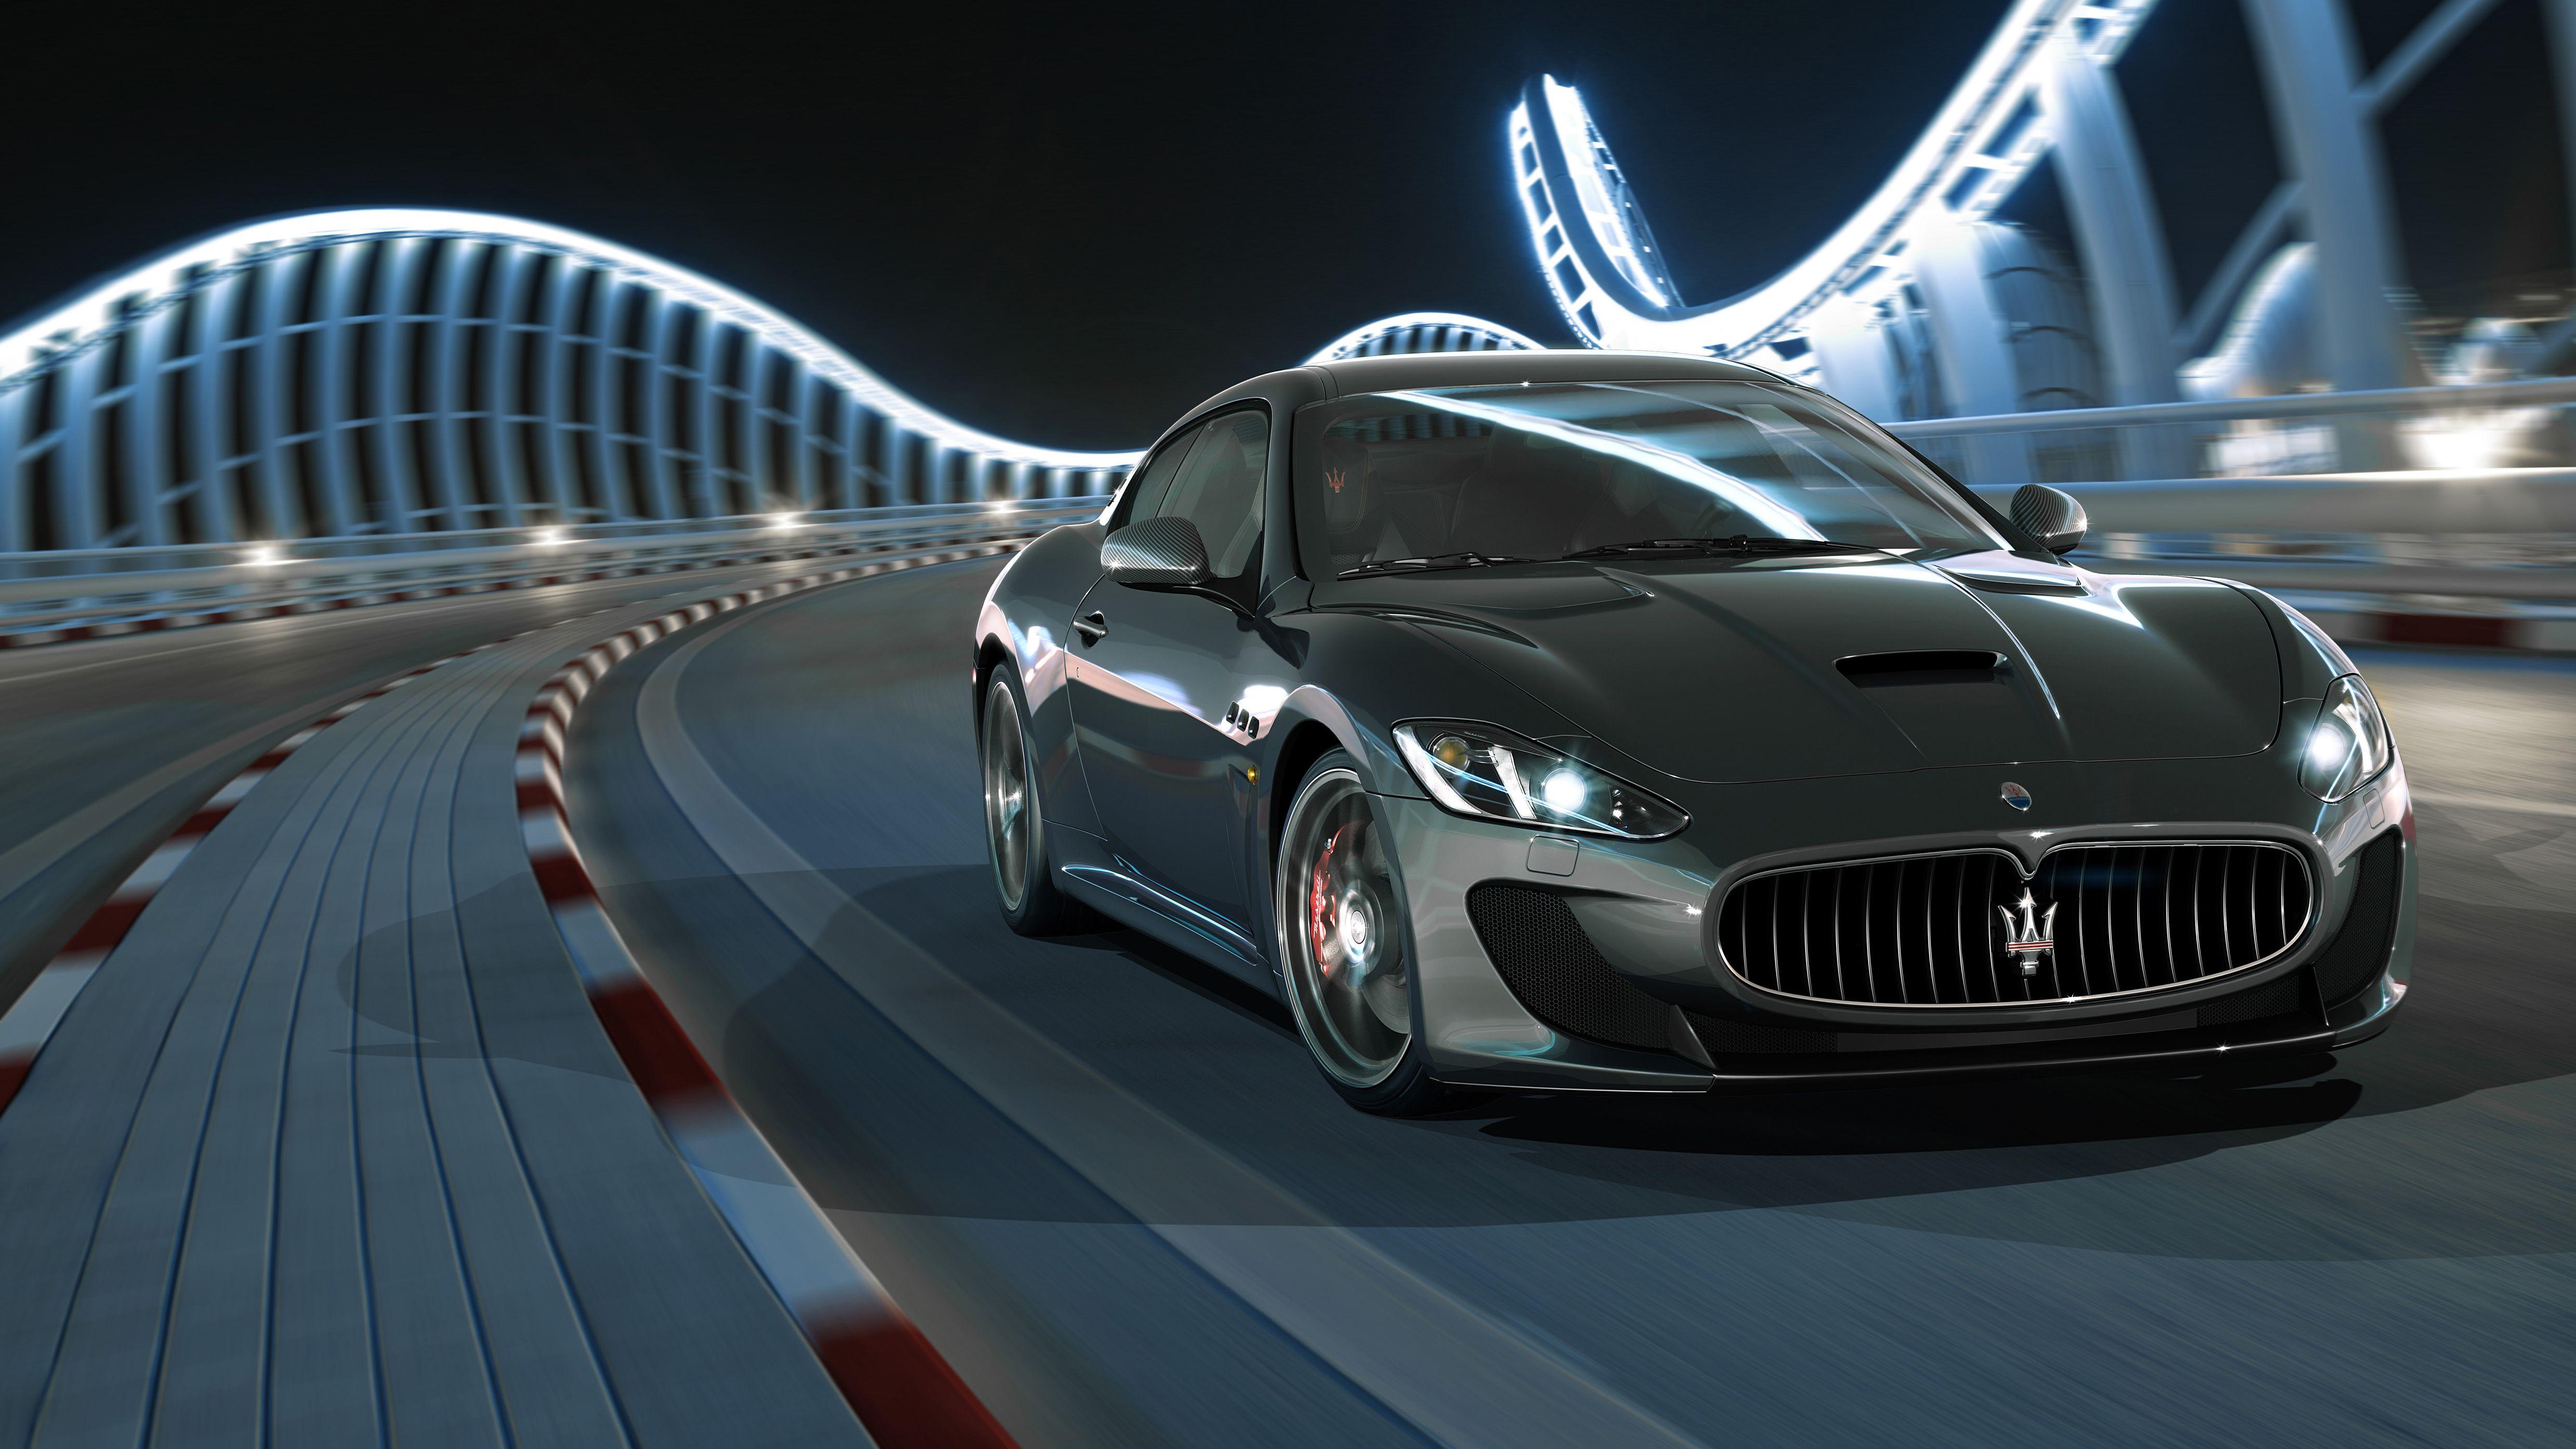 4k Maserati Wallpapers Top Free 4k Maserati Backgrounds Wallpaperaccess